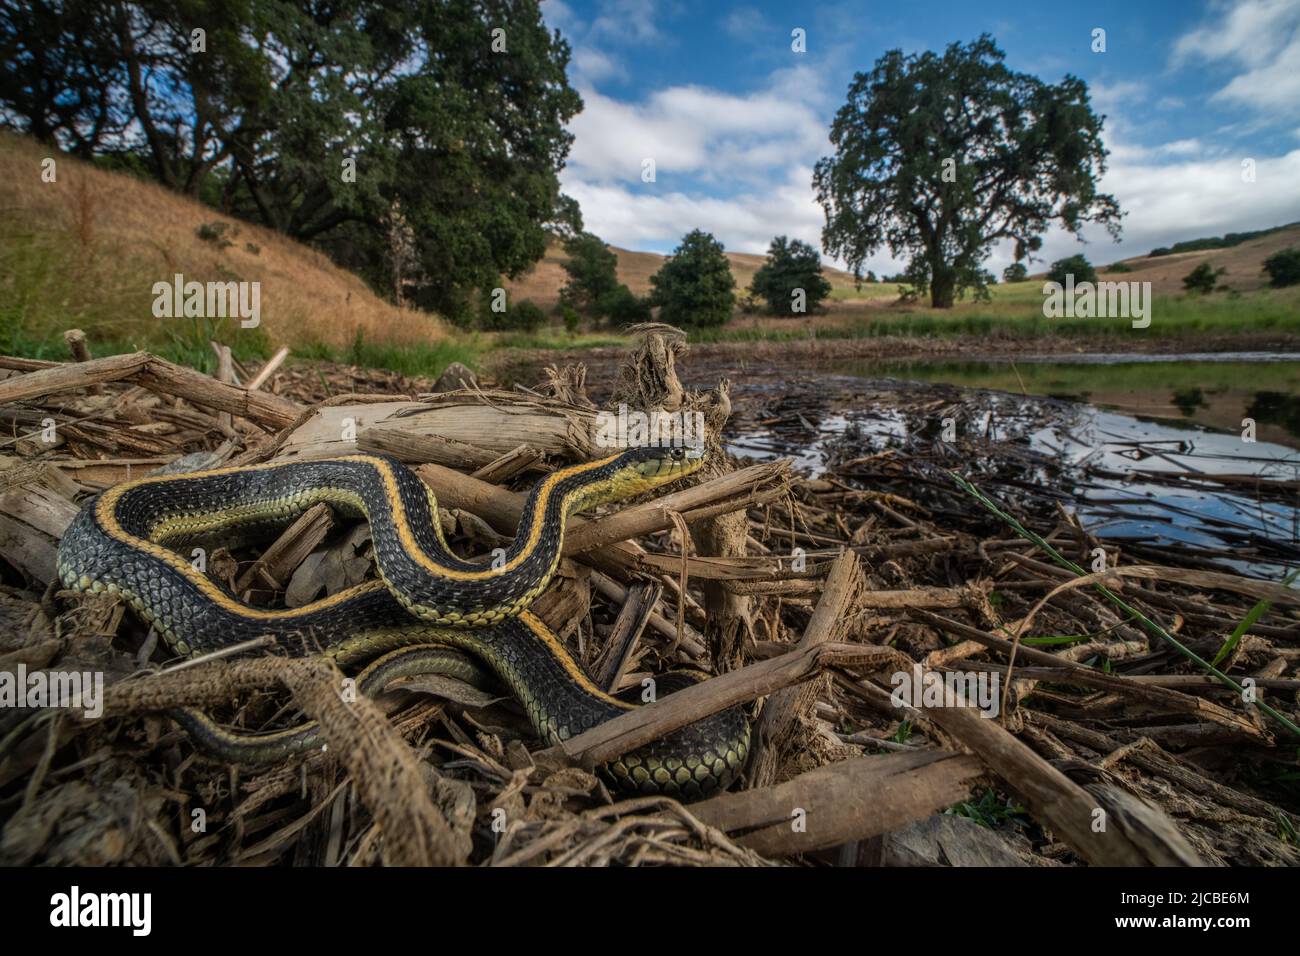 Diablo Range Gartersnake (Thamnophis atratus zaxanthus). The snake is near a pond in the San Francisco bay region of California, USA. Stock Photo